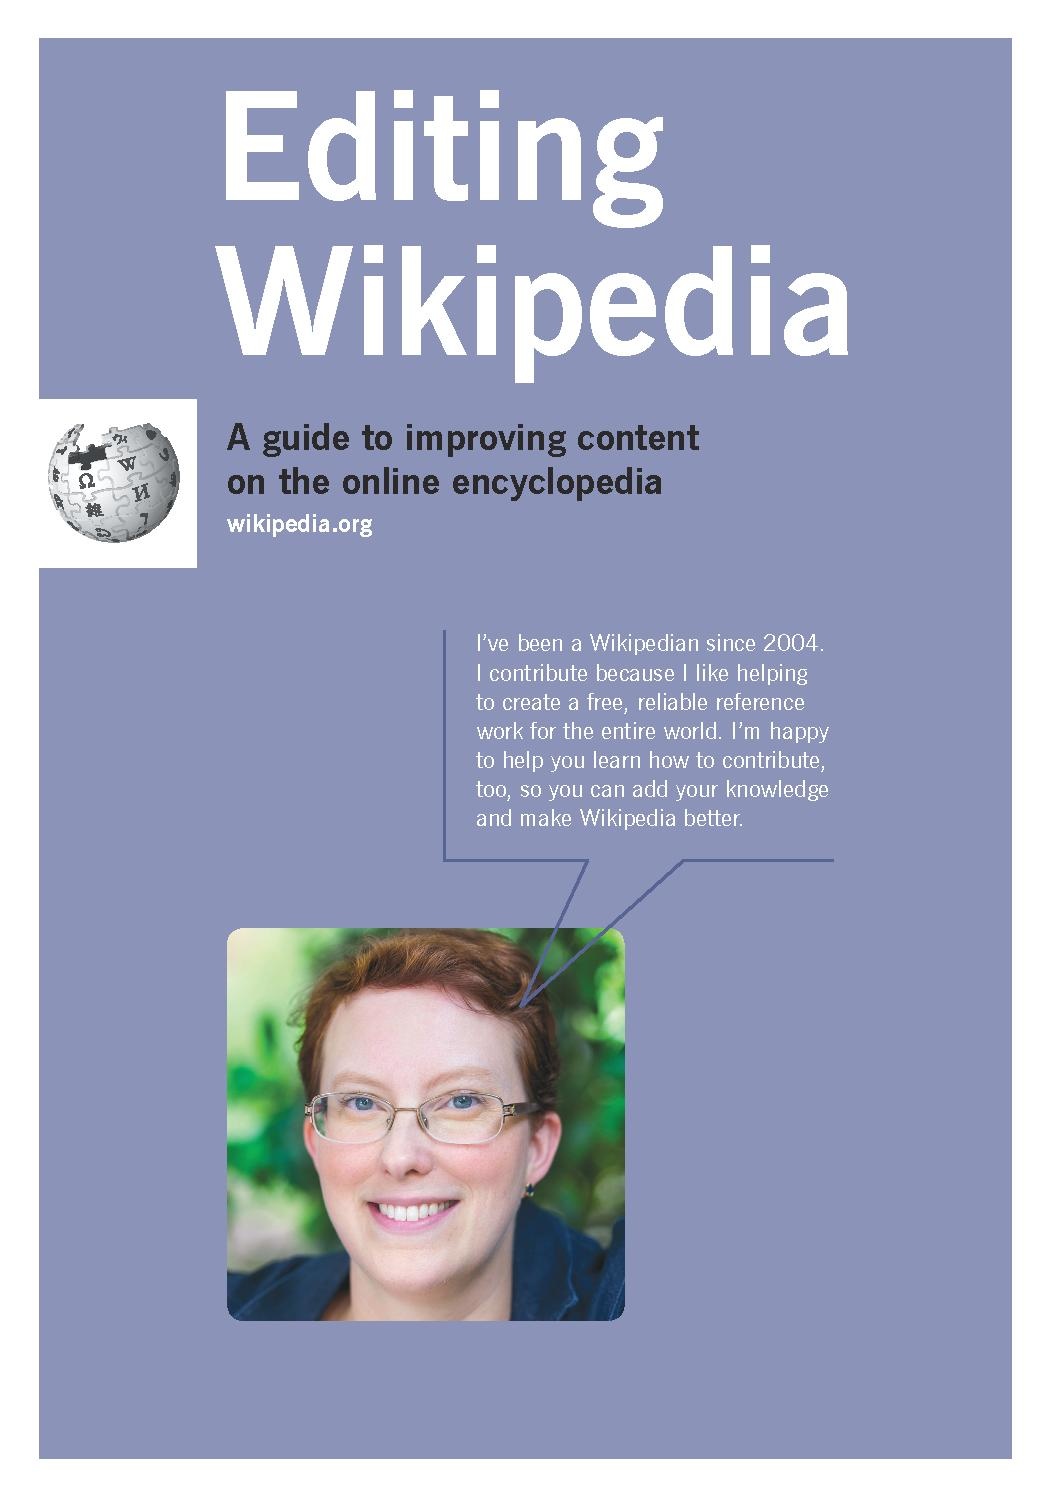 Editing Wikipedia brochure (Wiki Education Foundation) (2015).pdf